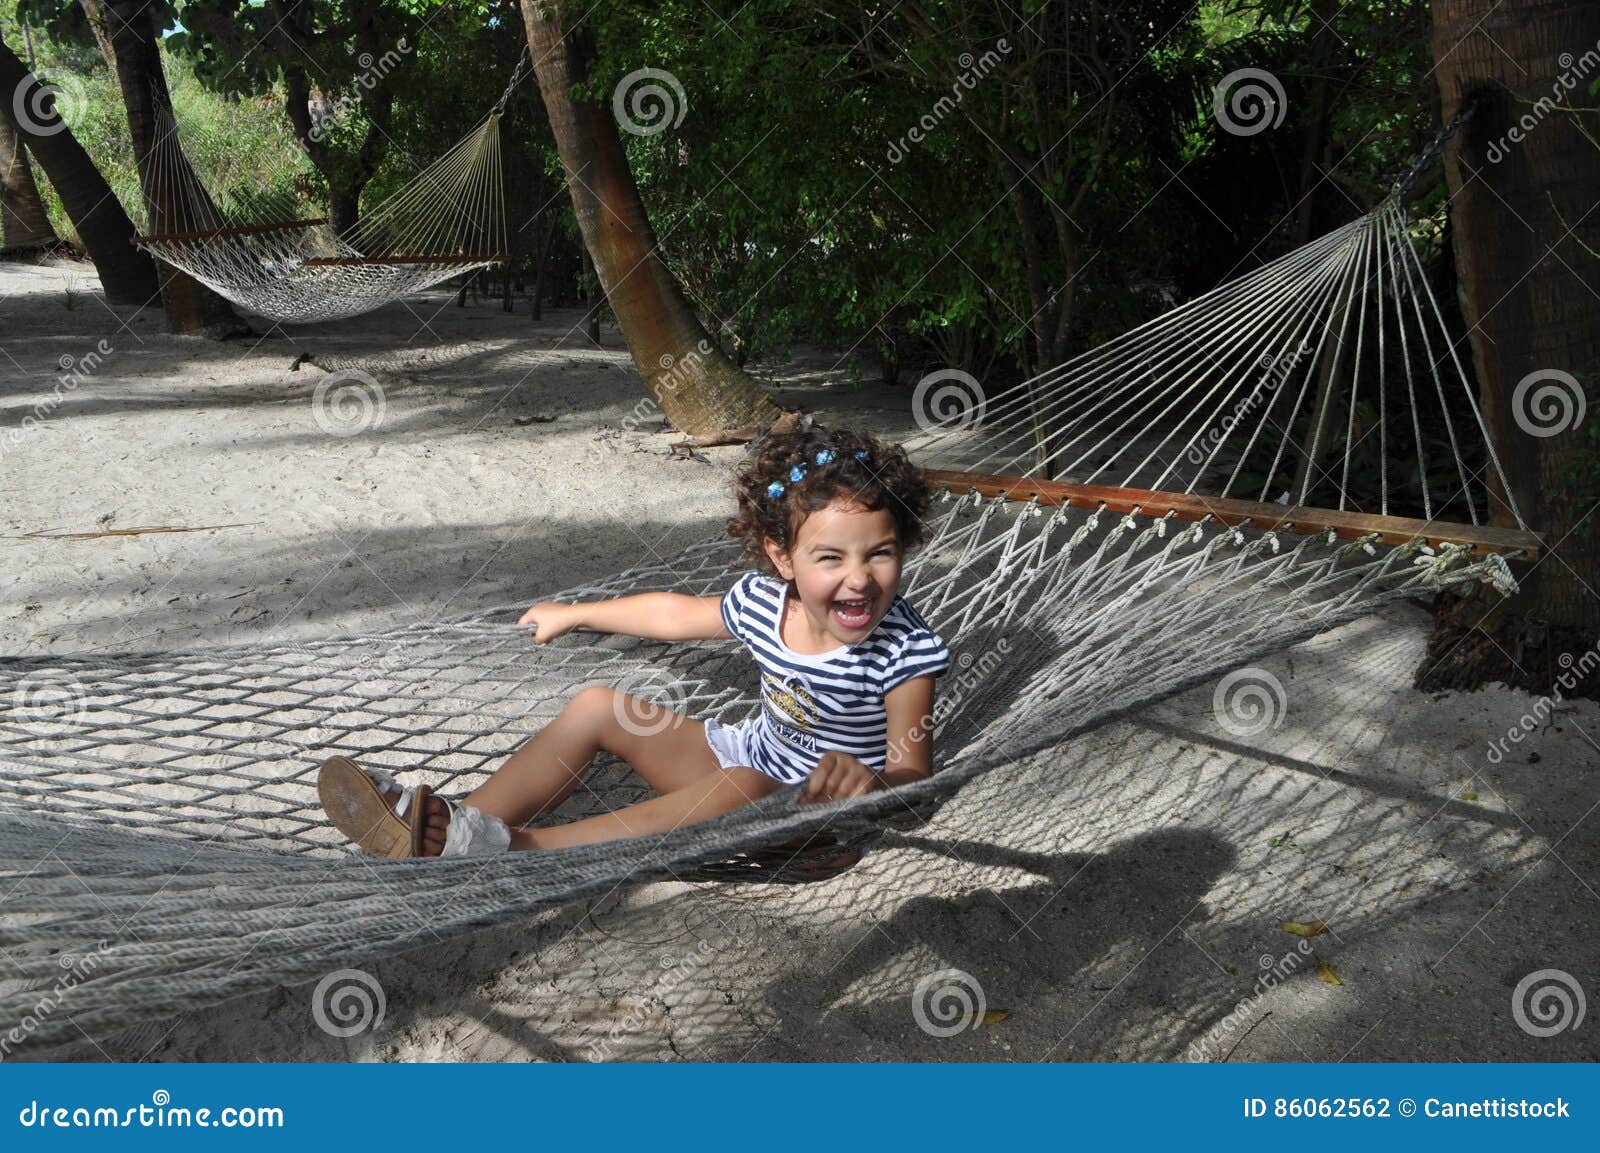 girl in a hammock